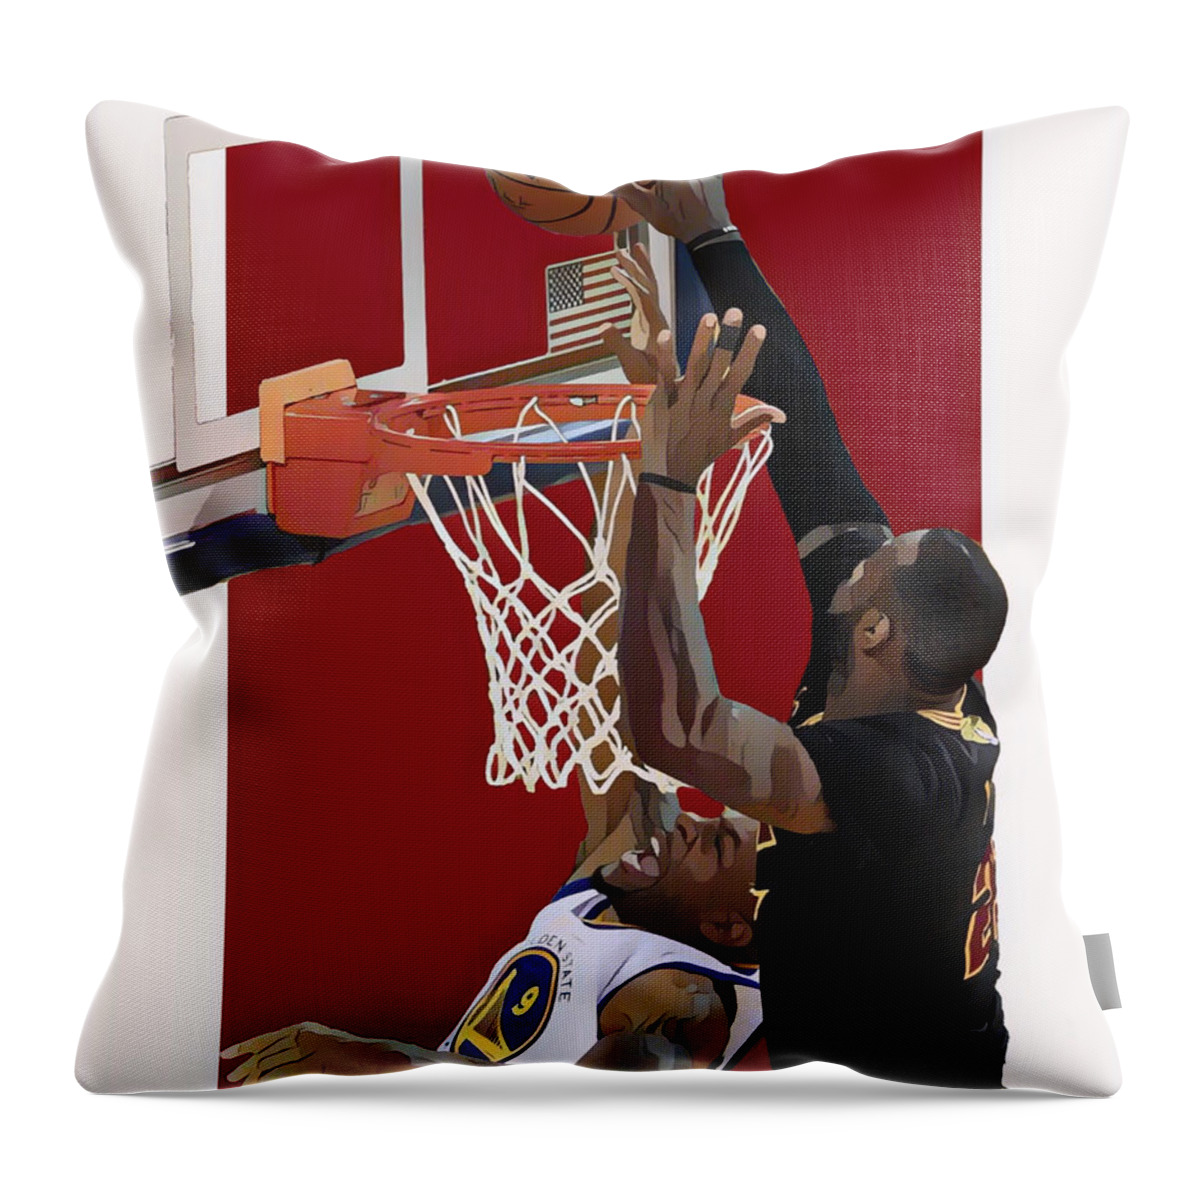 Lebron James Throw Pillow featuring the mixed media Lebron James Cleveland Cavaliers Oil Art by Joe Hamilton